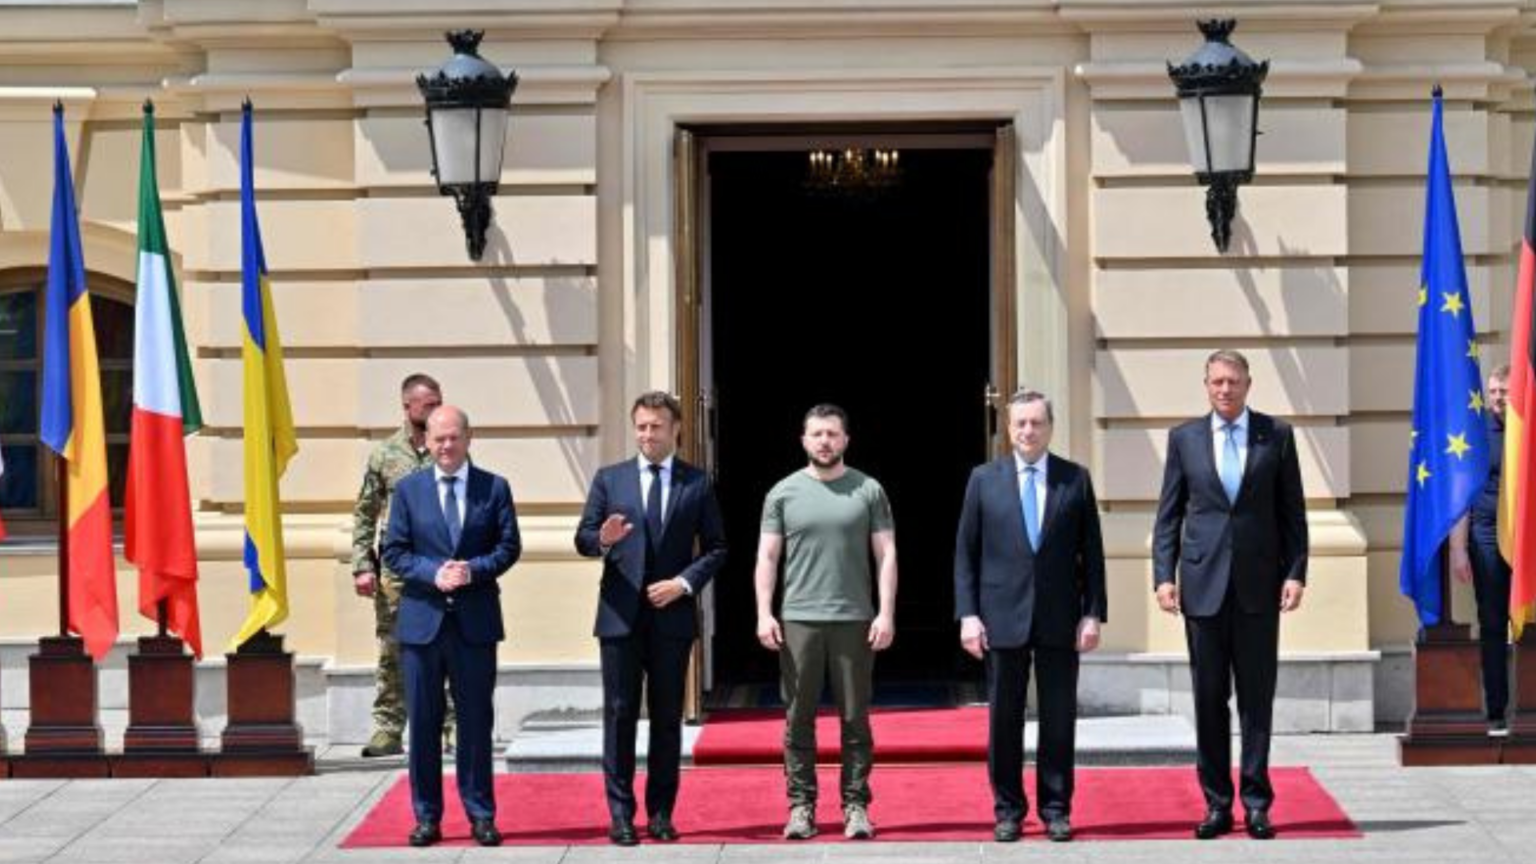 Four European leaders visit Ukraine, signalling a united European community